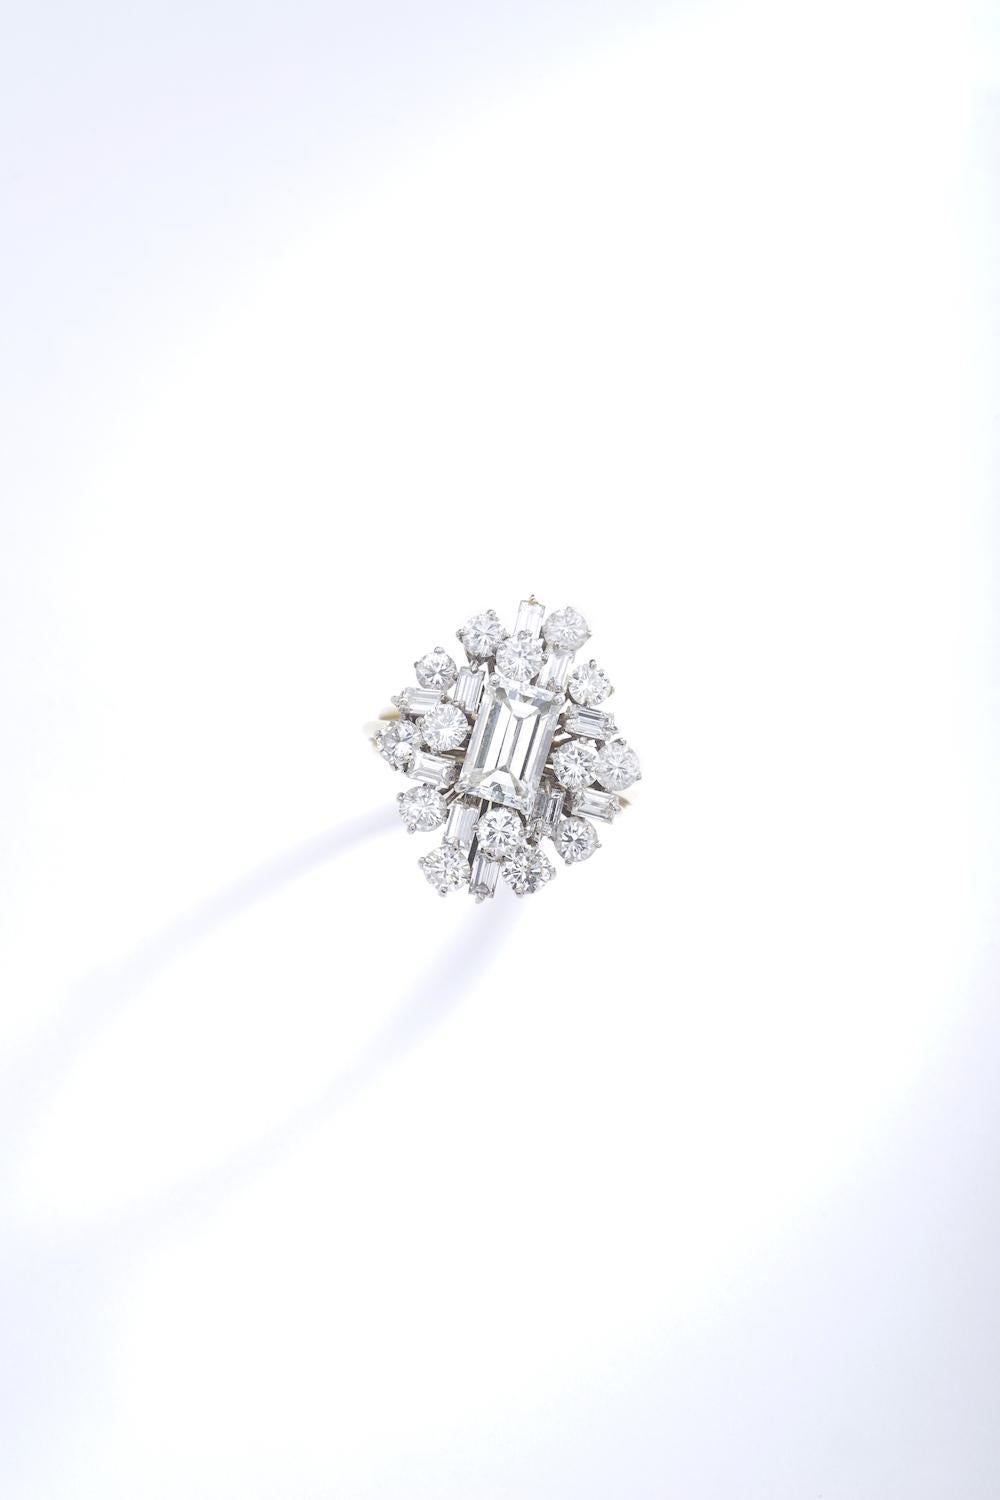 Emerald cut Diamond surround by Round cut Diamond mounted on platinum and yellow gold ring. Just stunning!
Circa 1970.